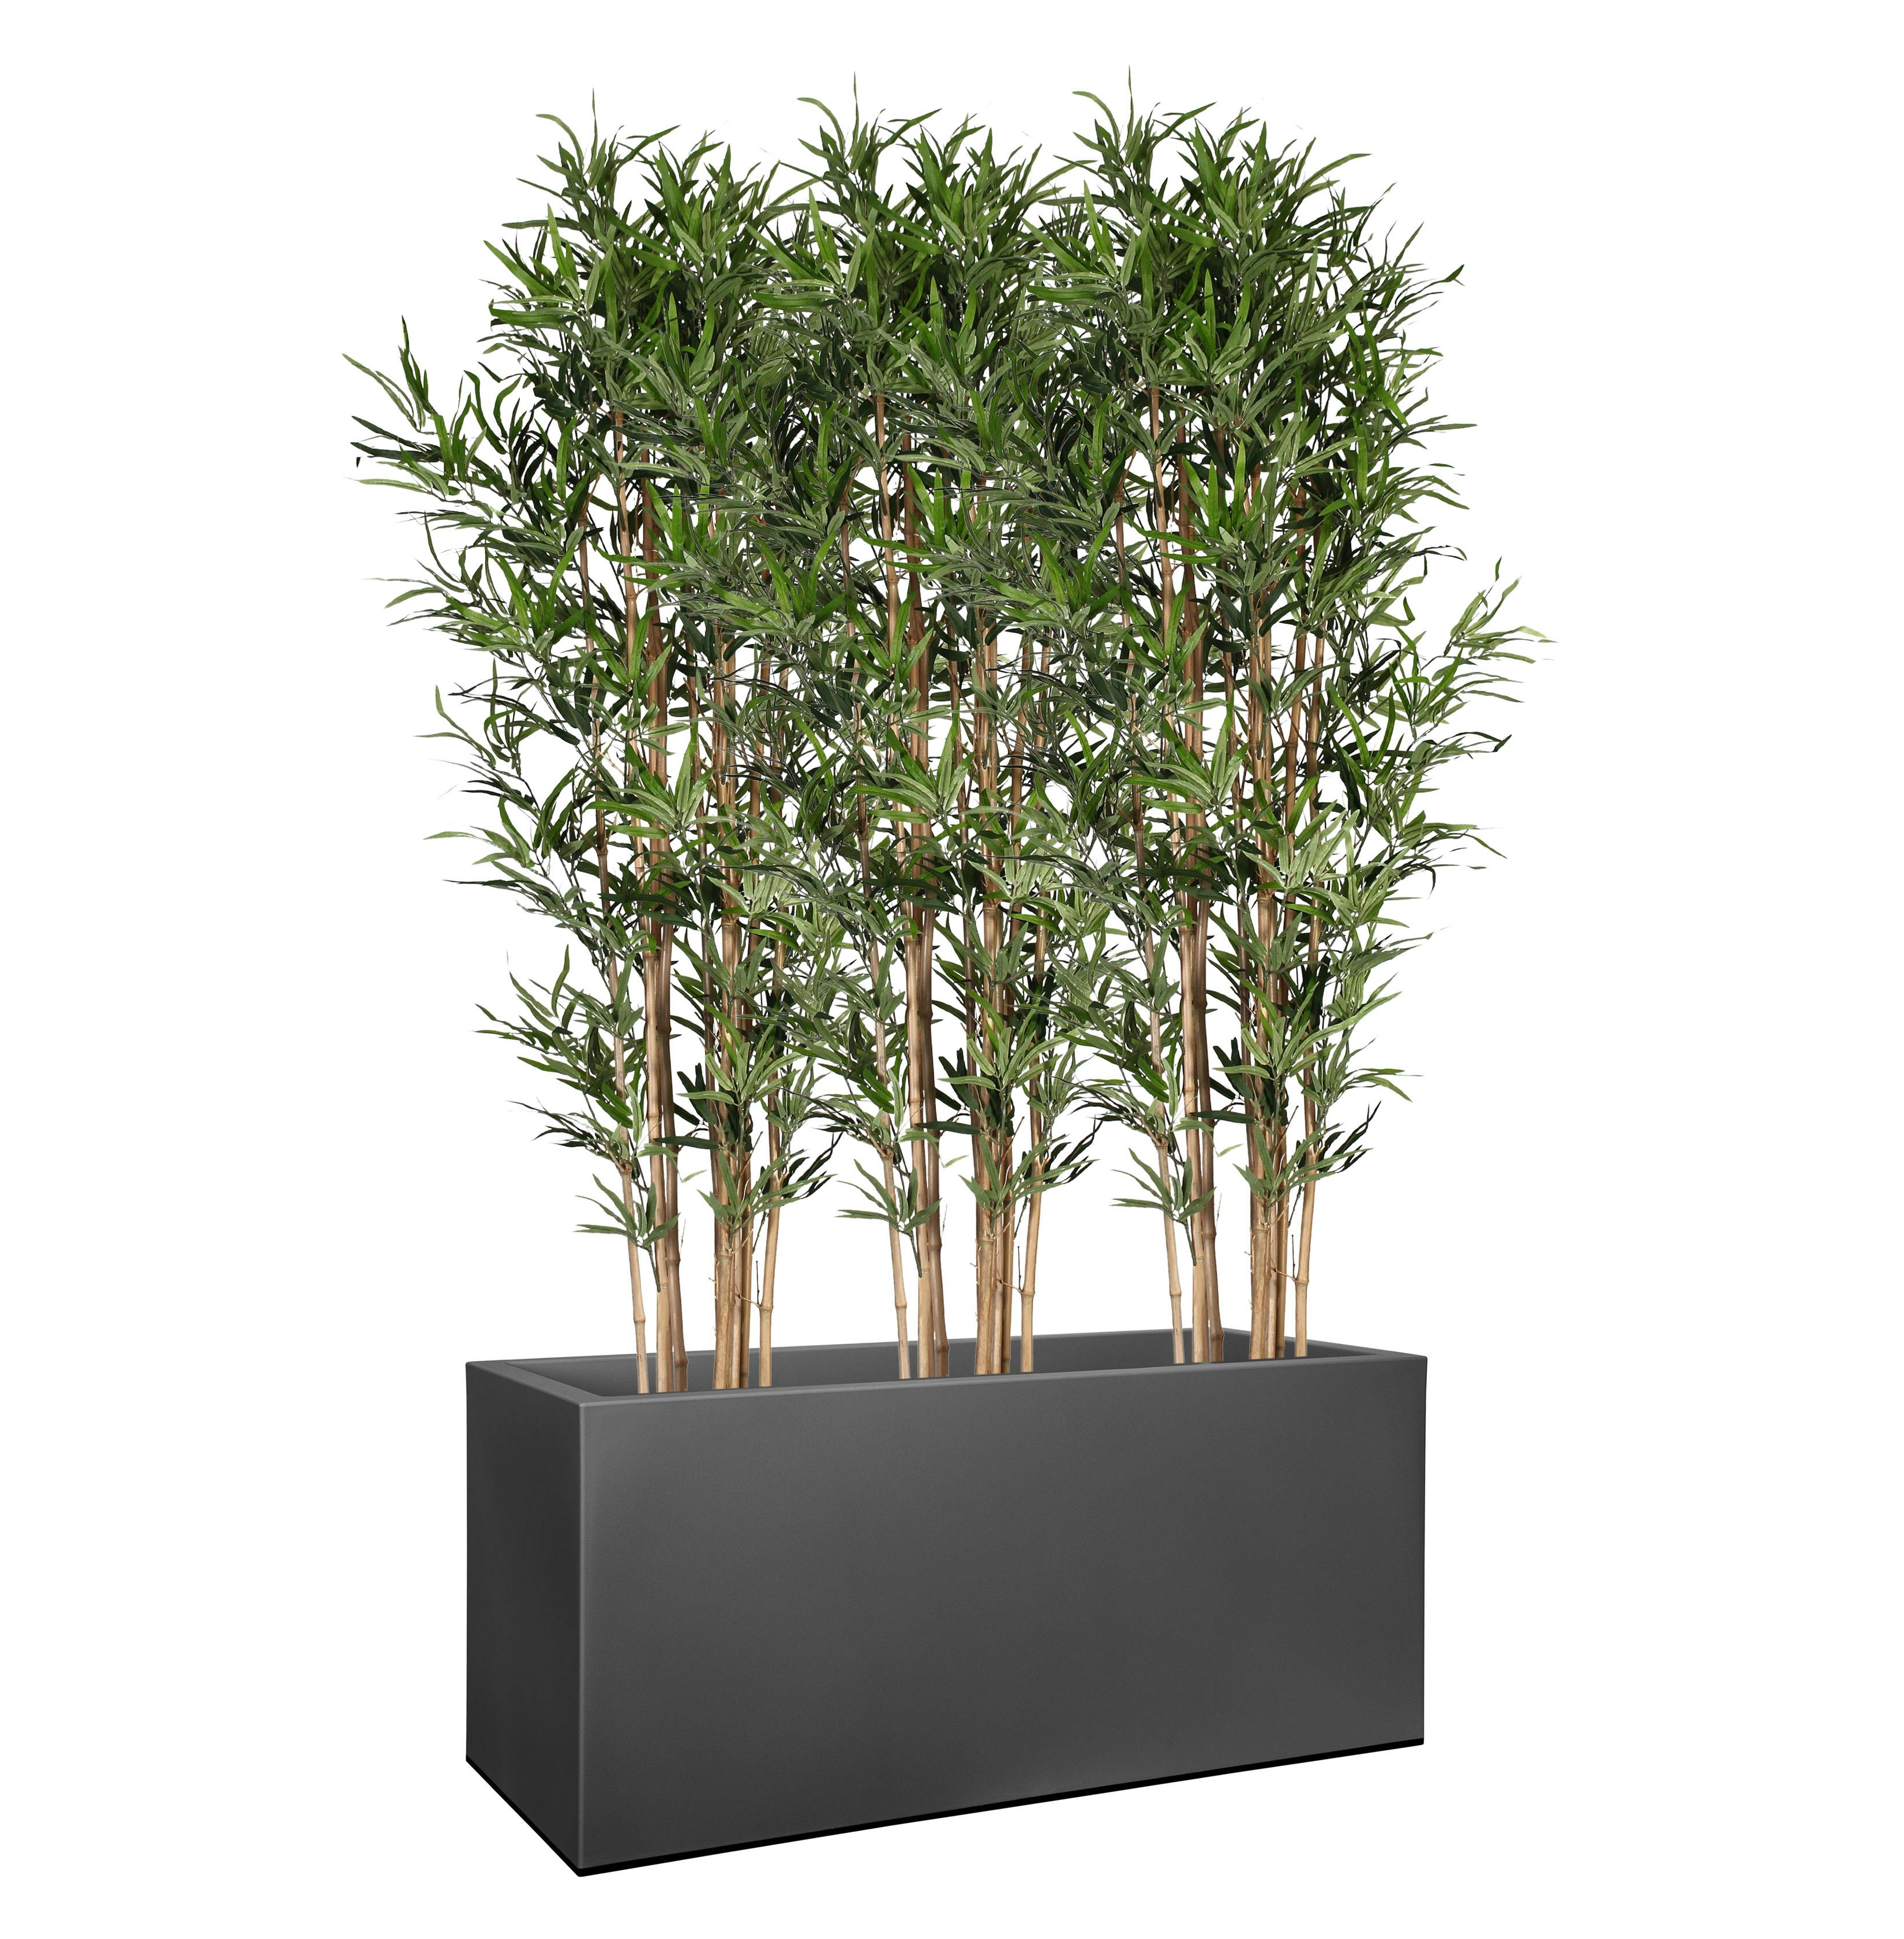 Artificial bamboo screening in black planter